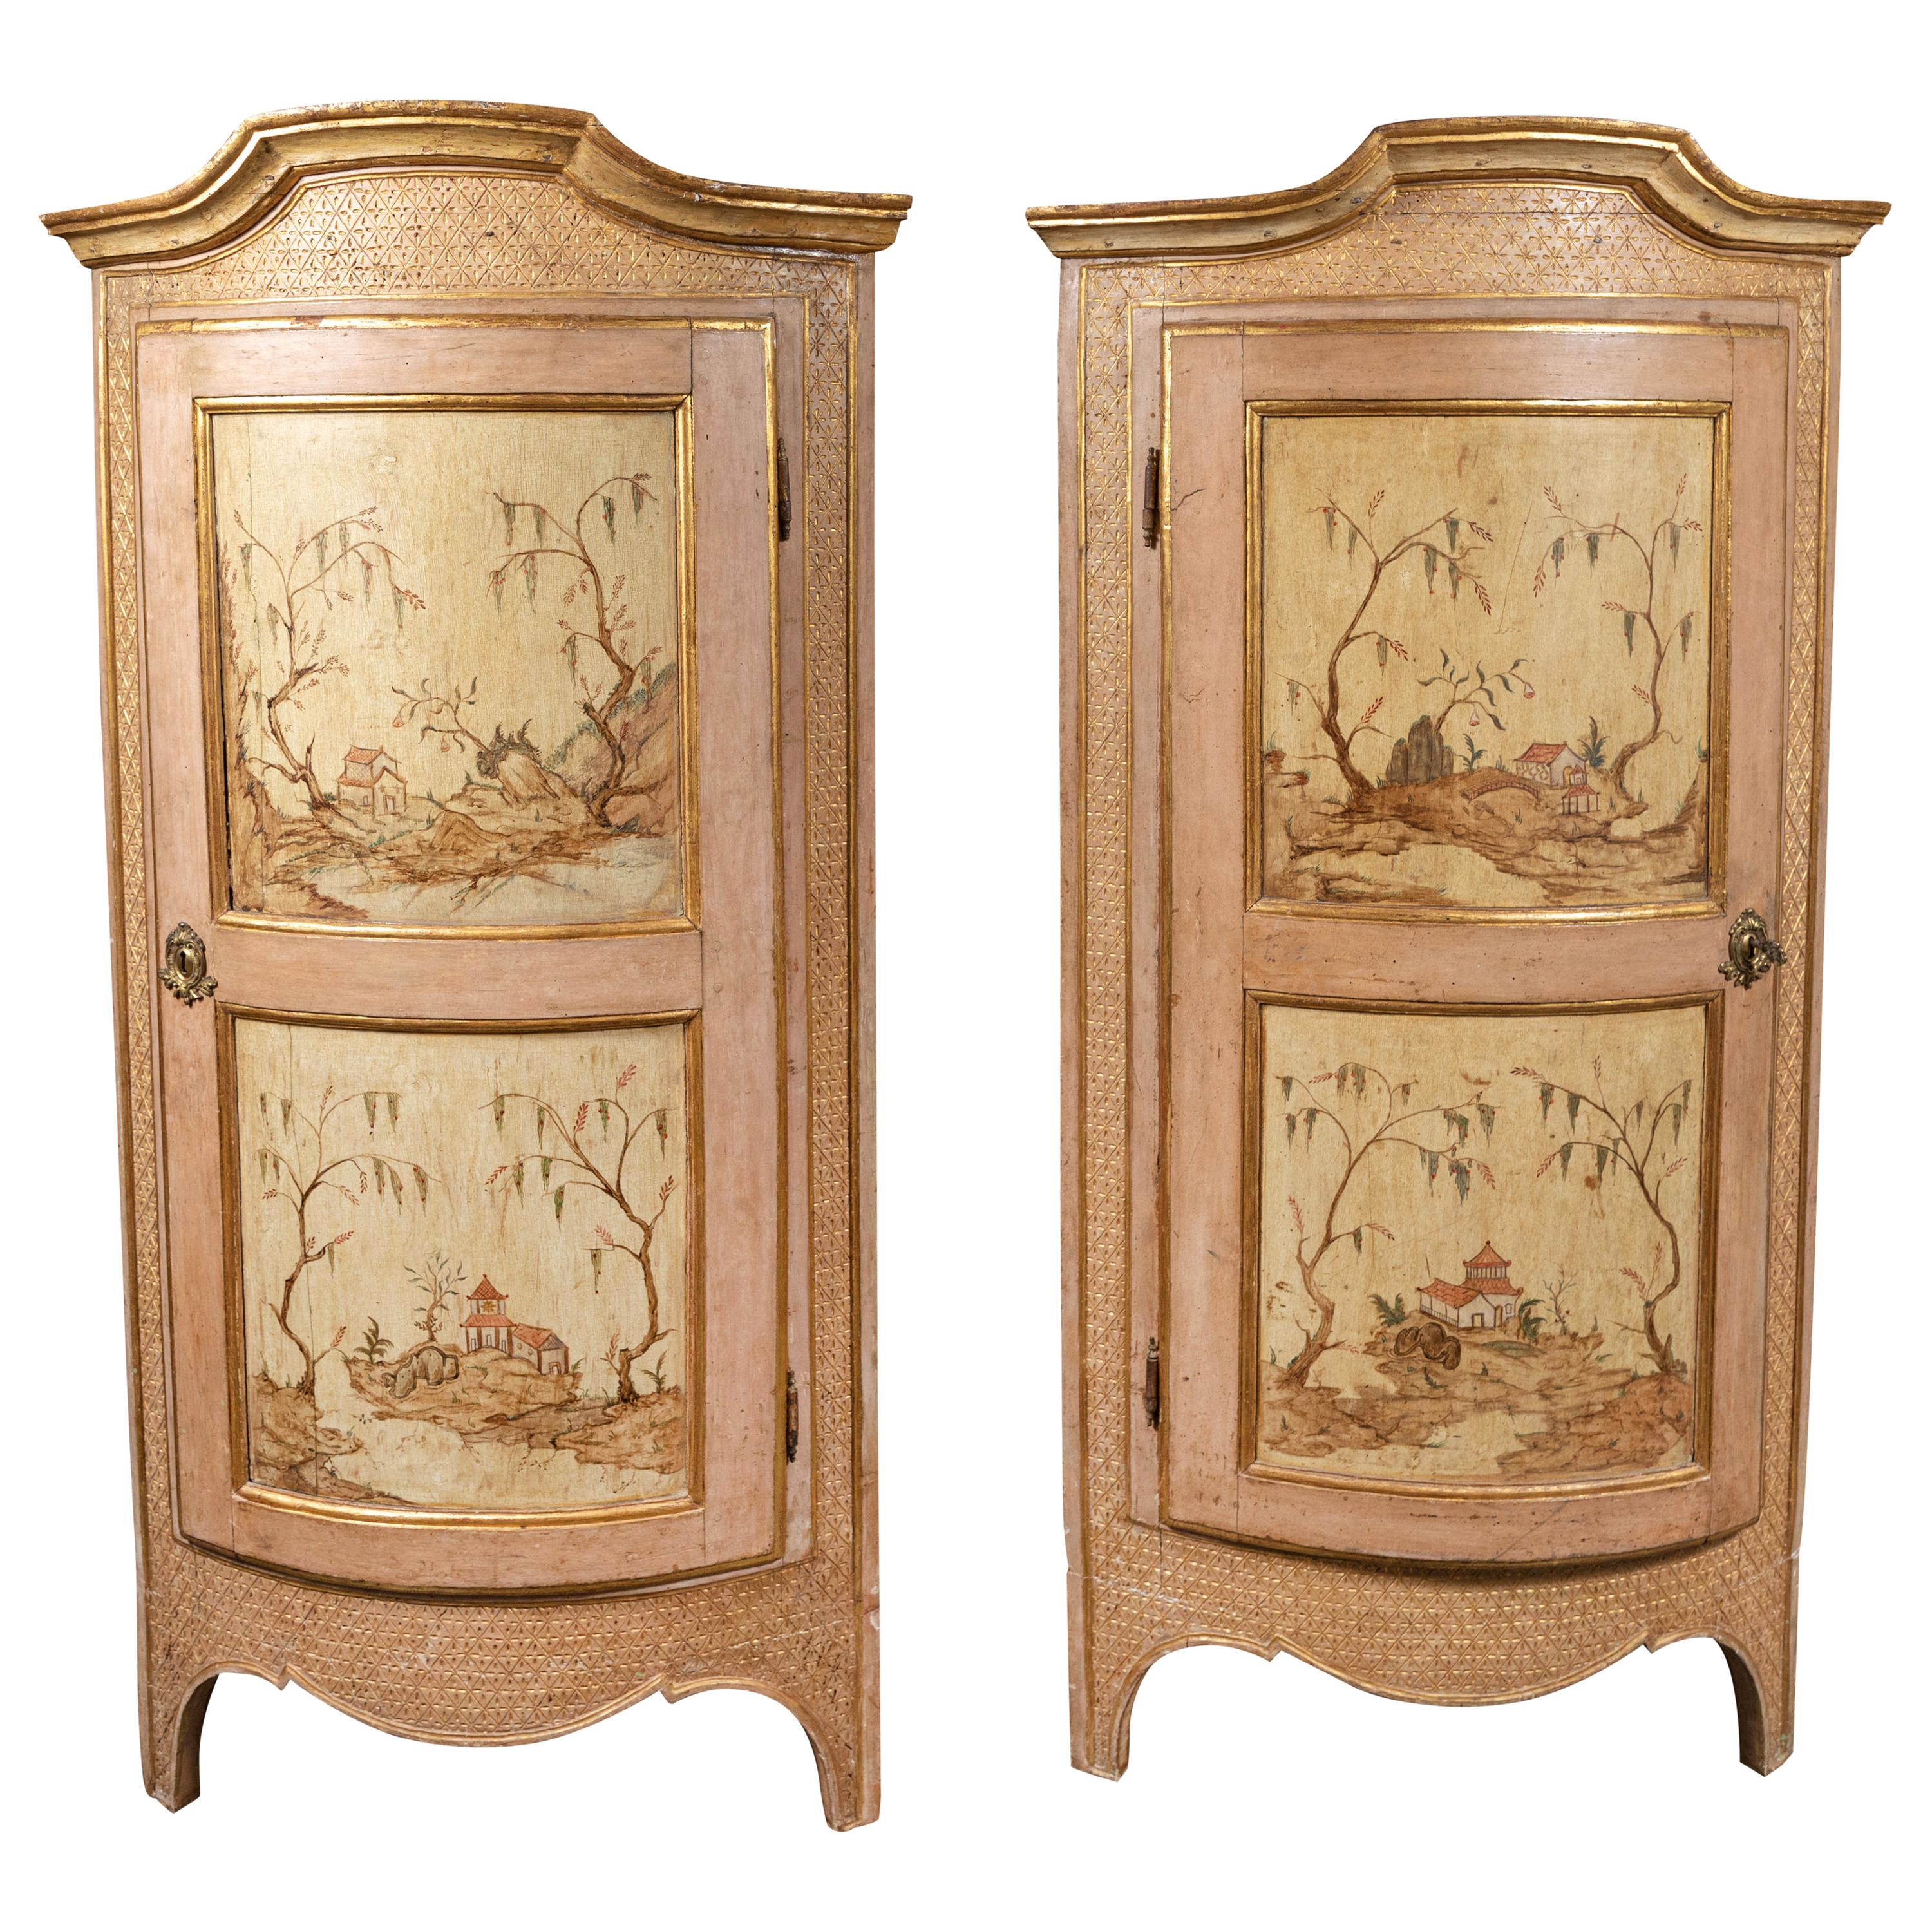 Completely Original, 18th Century Corner Cabinets